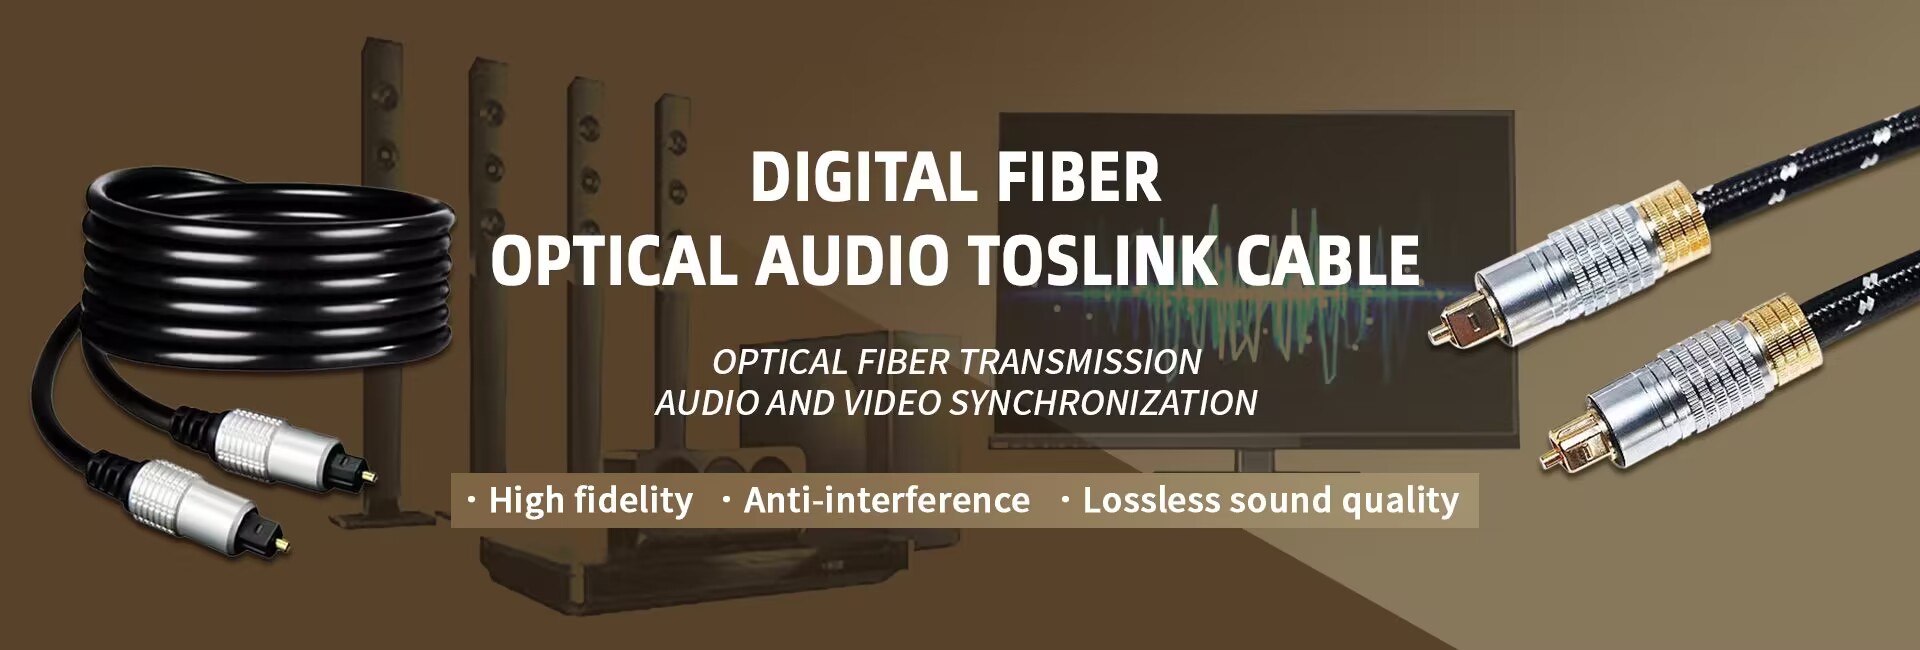 Digital Fiber Optical Toslink Audio Cable